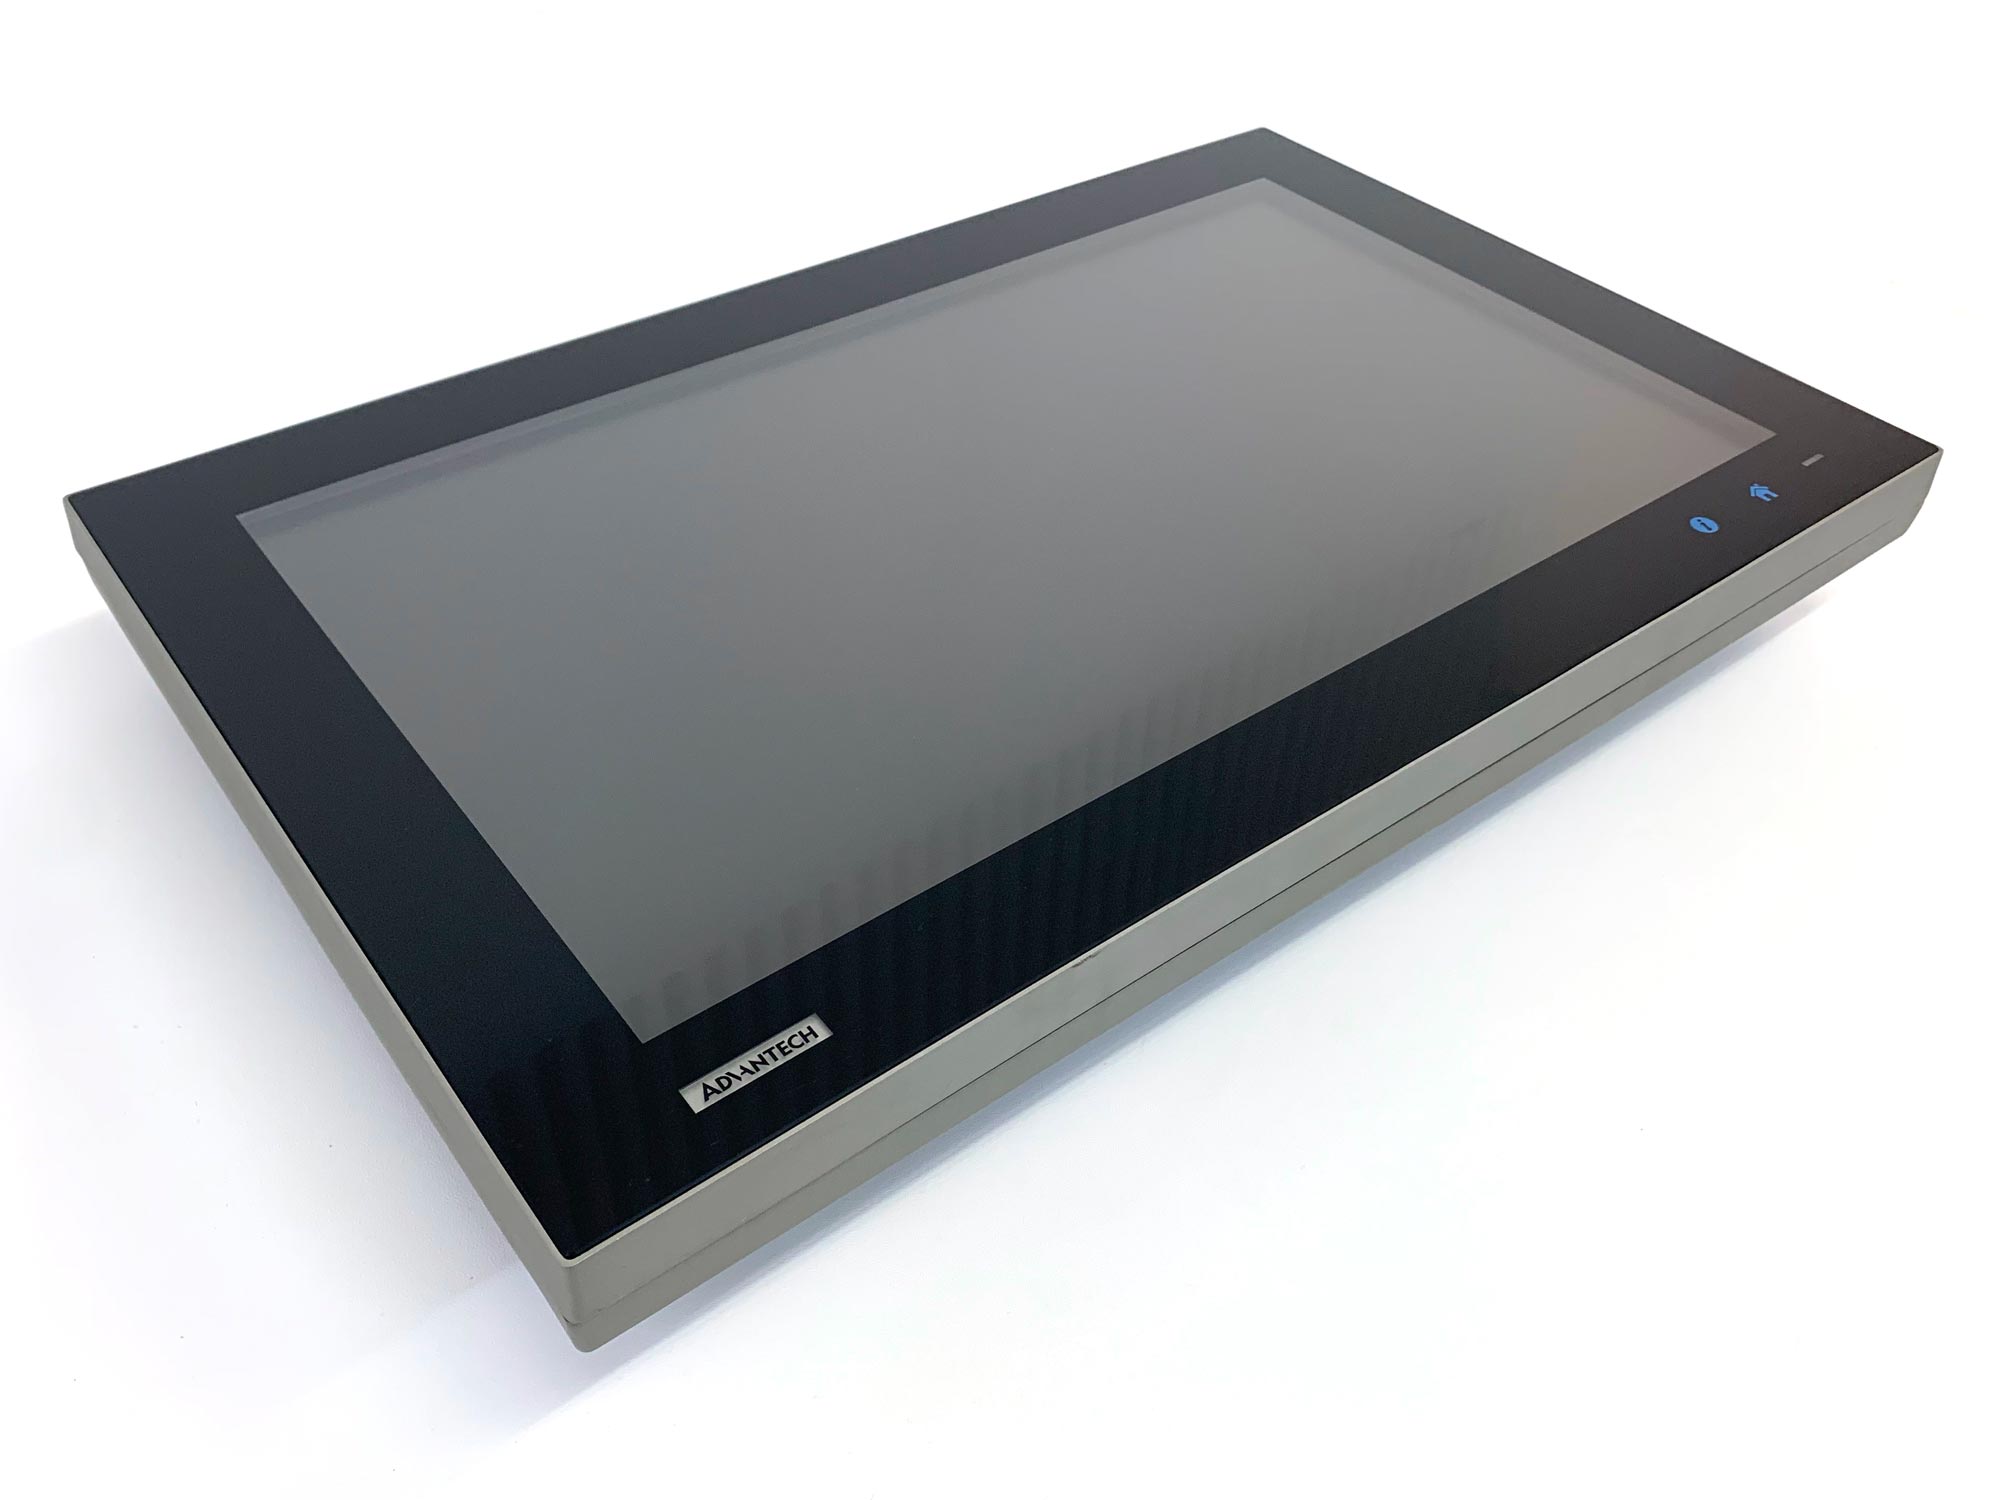 SPC-1840WP - rundum geschlossener Touch-Panel PC mit 18,5-Zoll Multi-Touch Widescreen Display